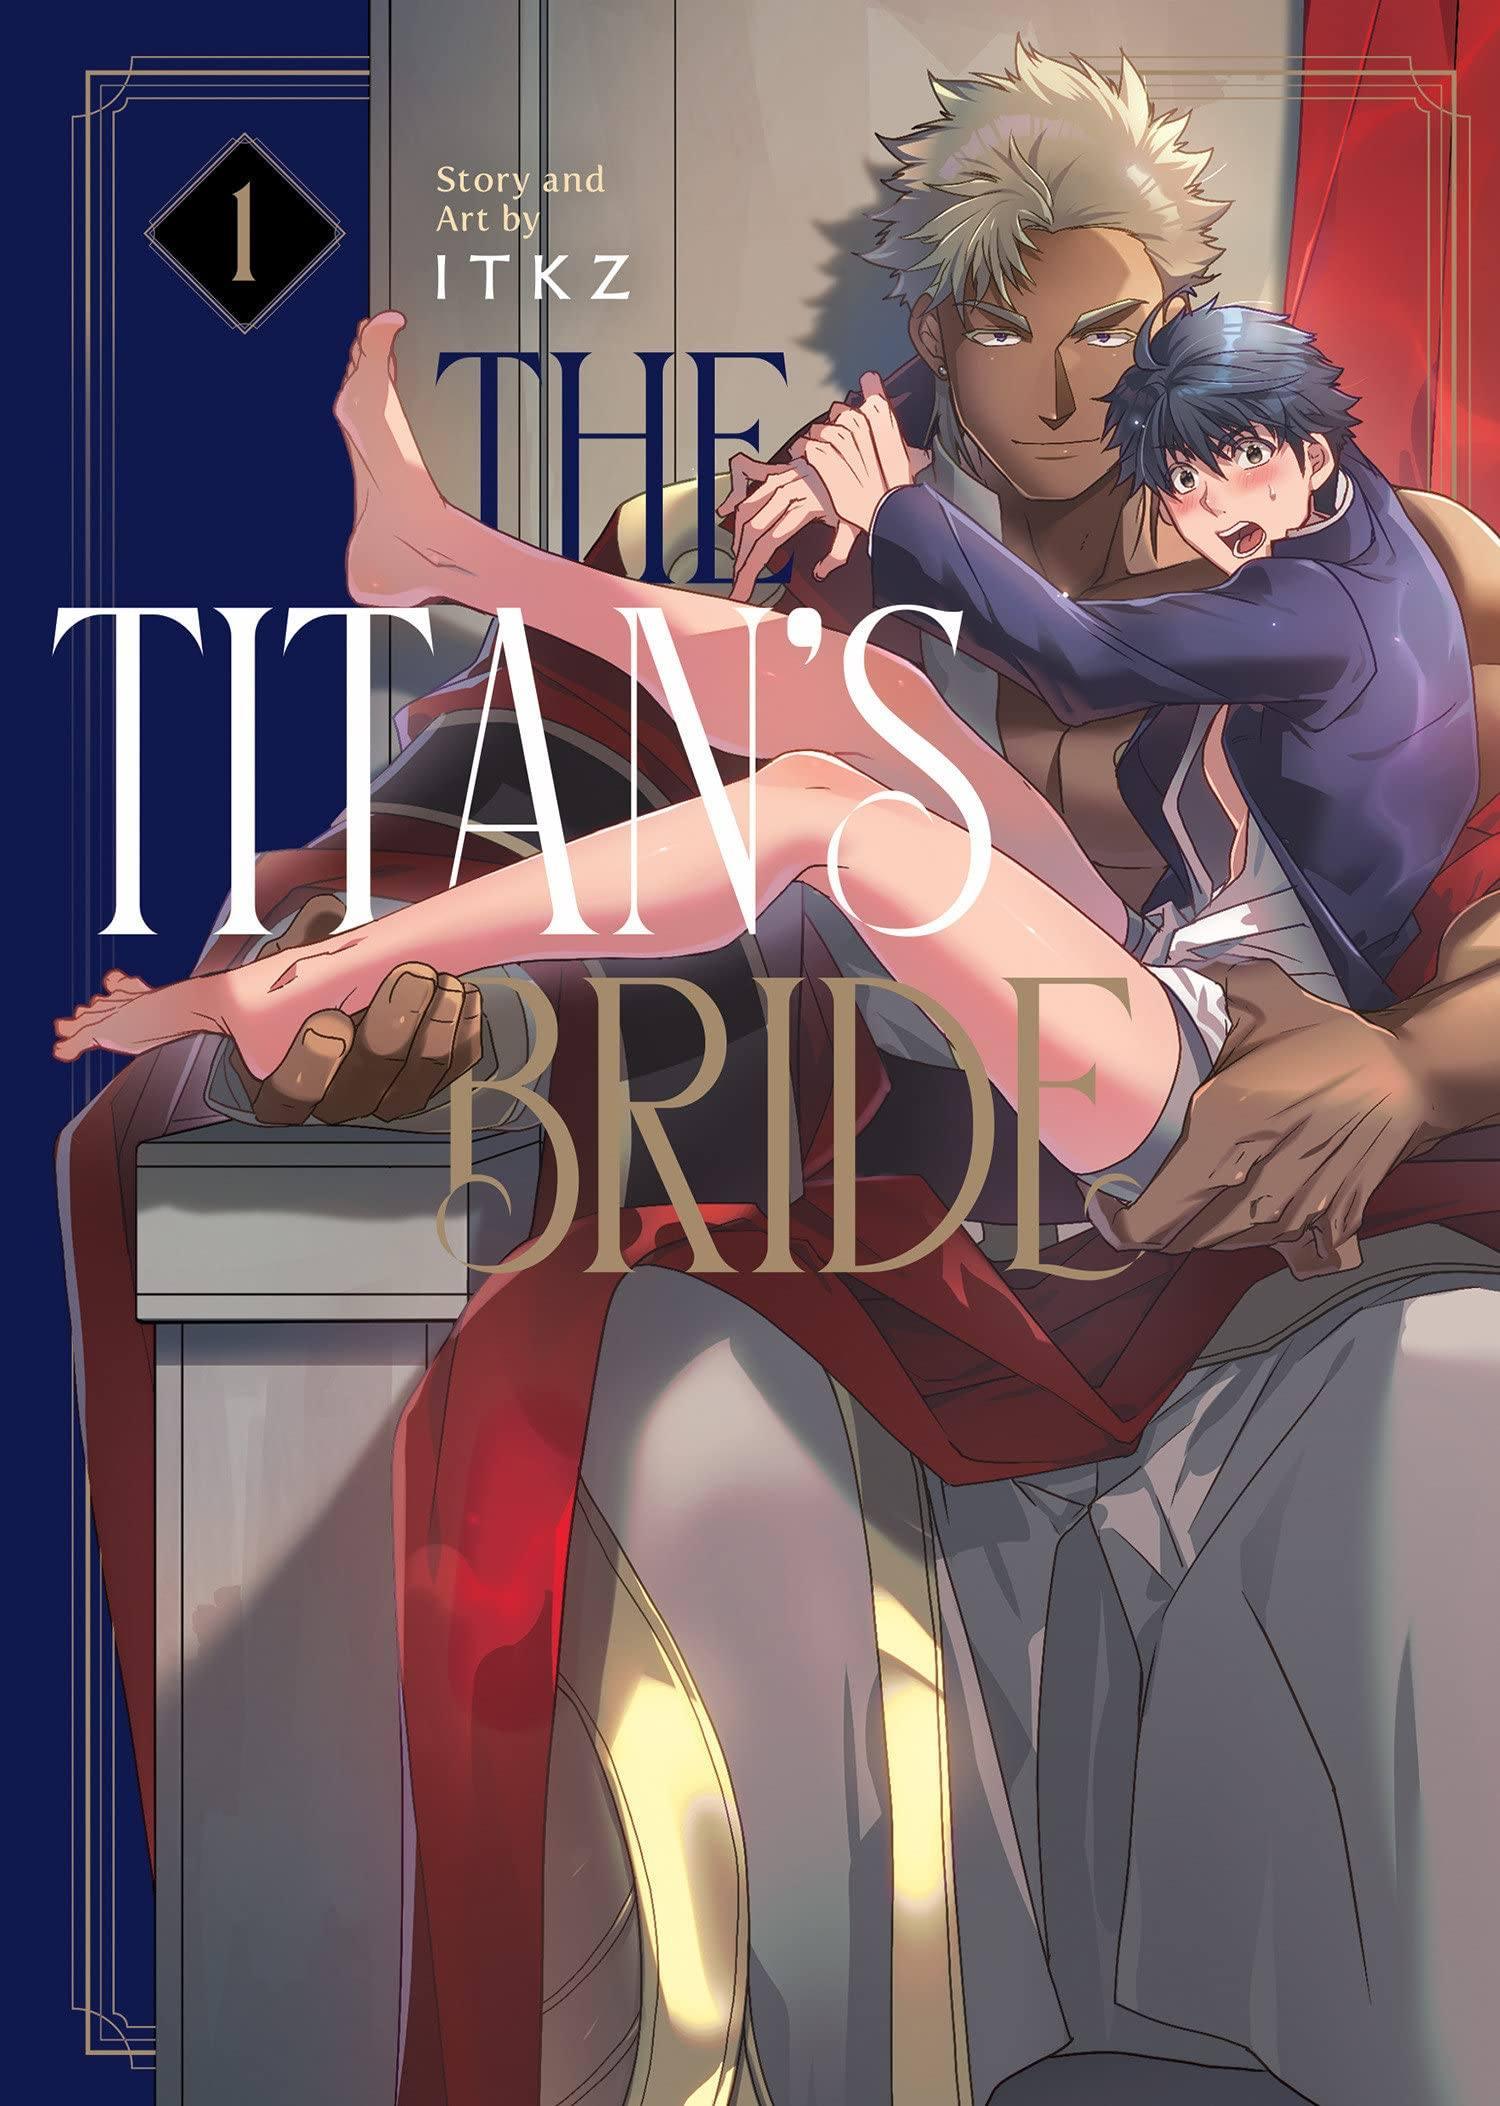 The Titan's Bride Kyojinzoku no Hanayome 1-3 Comic set Japanese Manga Book